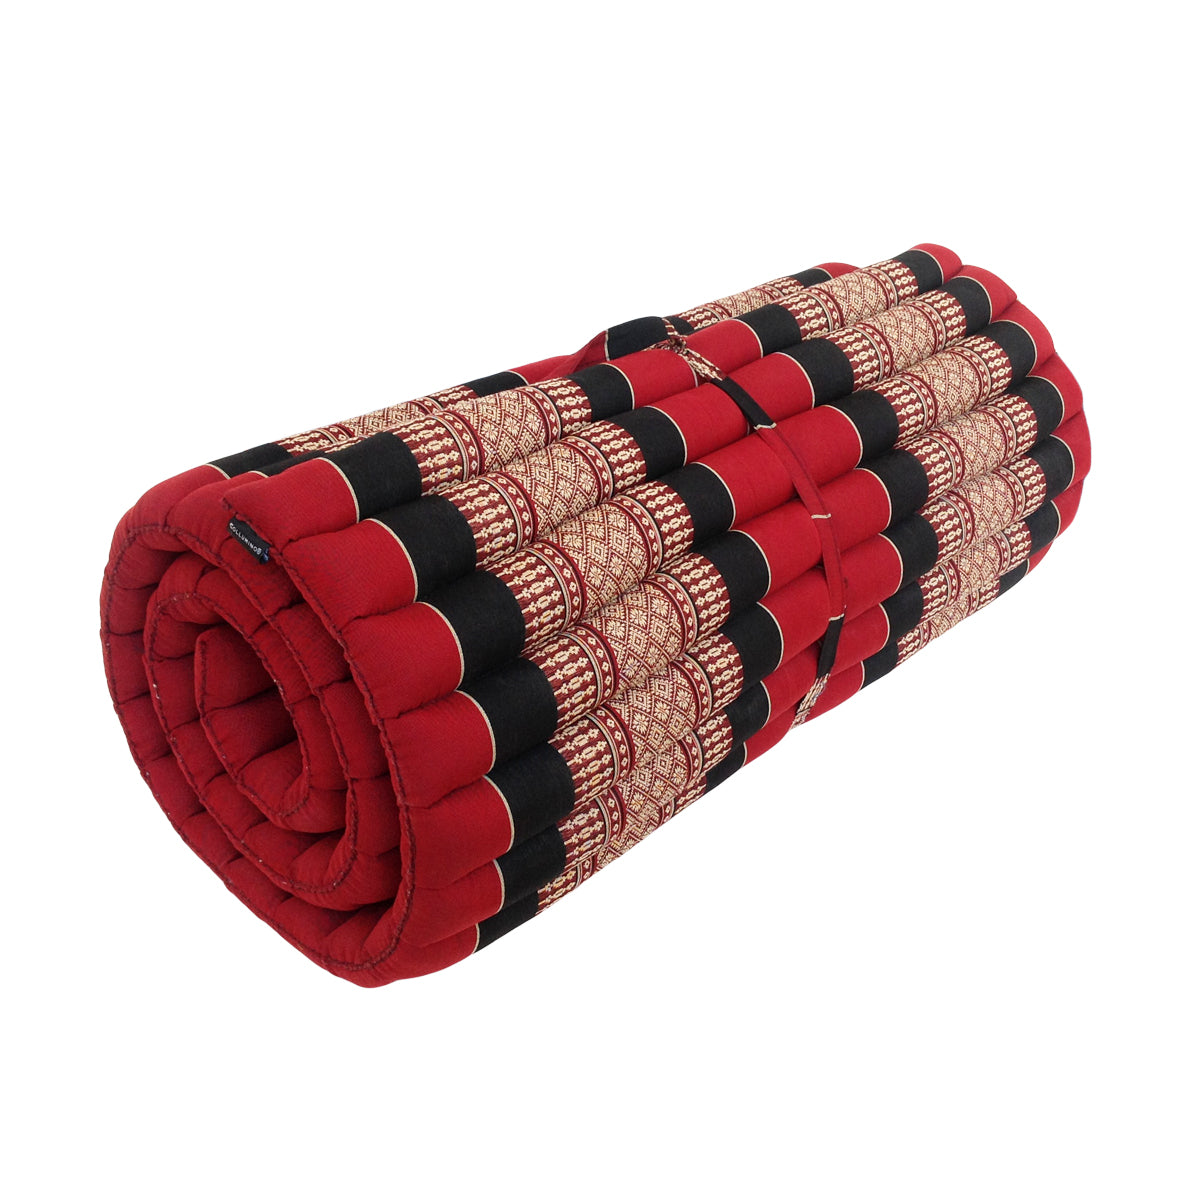 Thai Kapok Roll Up Mattress Size 200 x 75cm  (Black Red)